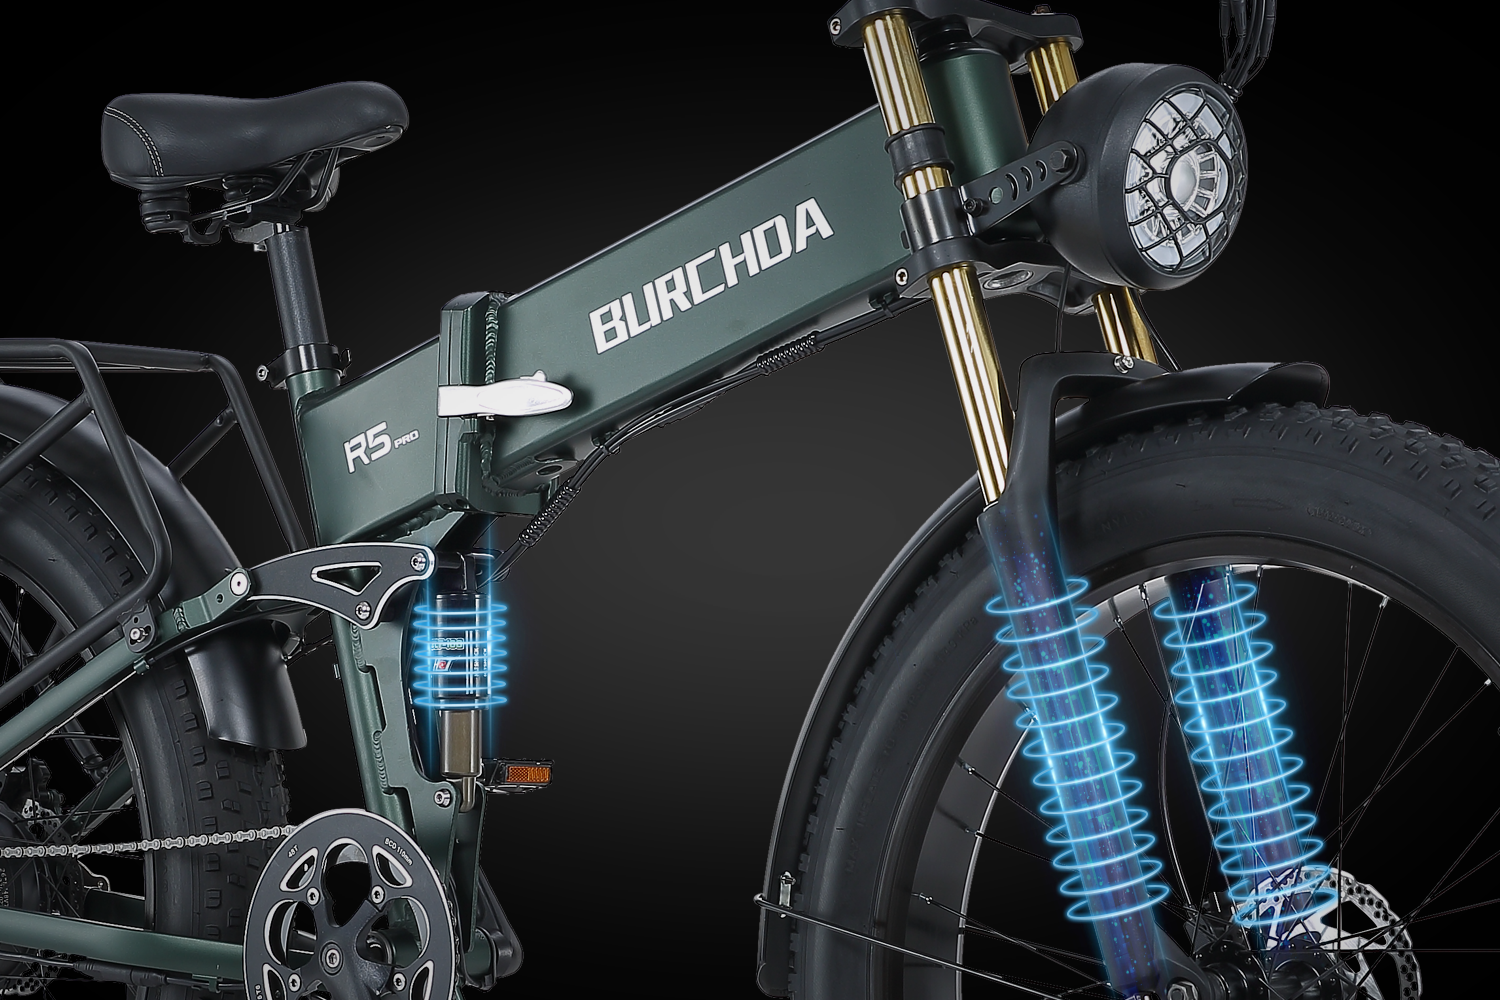 Burchda Bikes